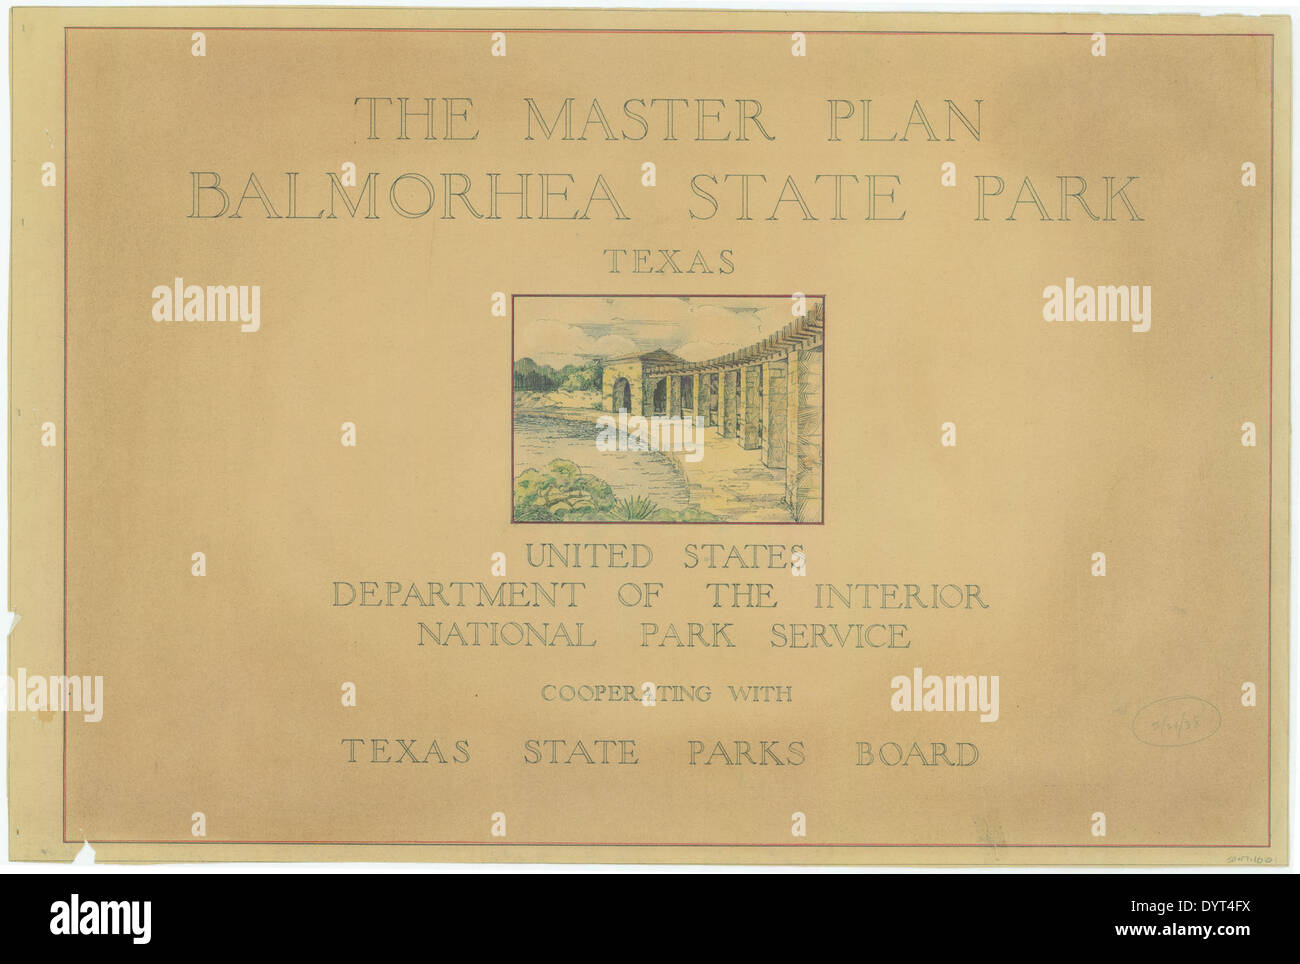 Balmorhea State Park - Master Plan Deckblatt - SP47-100 Stockfoto